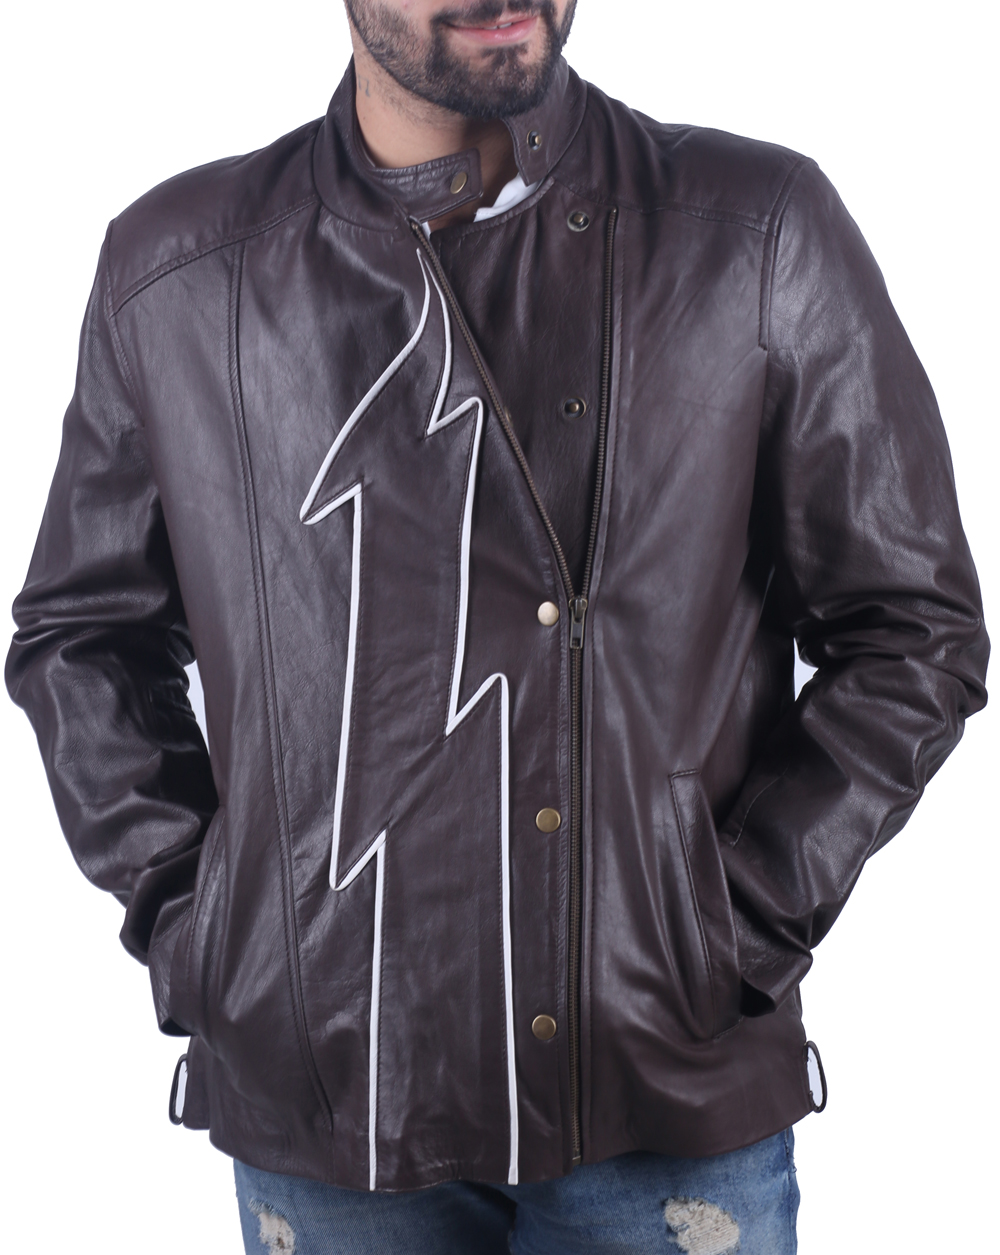 Flash flash season 2 jay garrick jacket